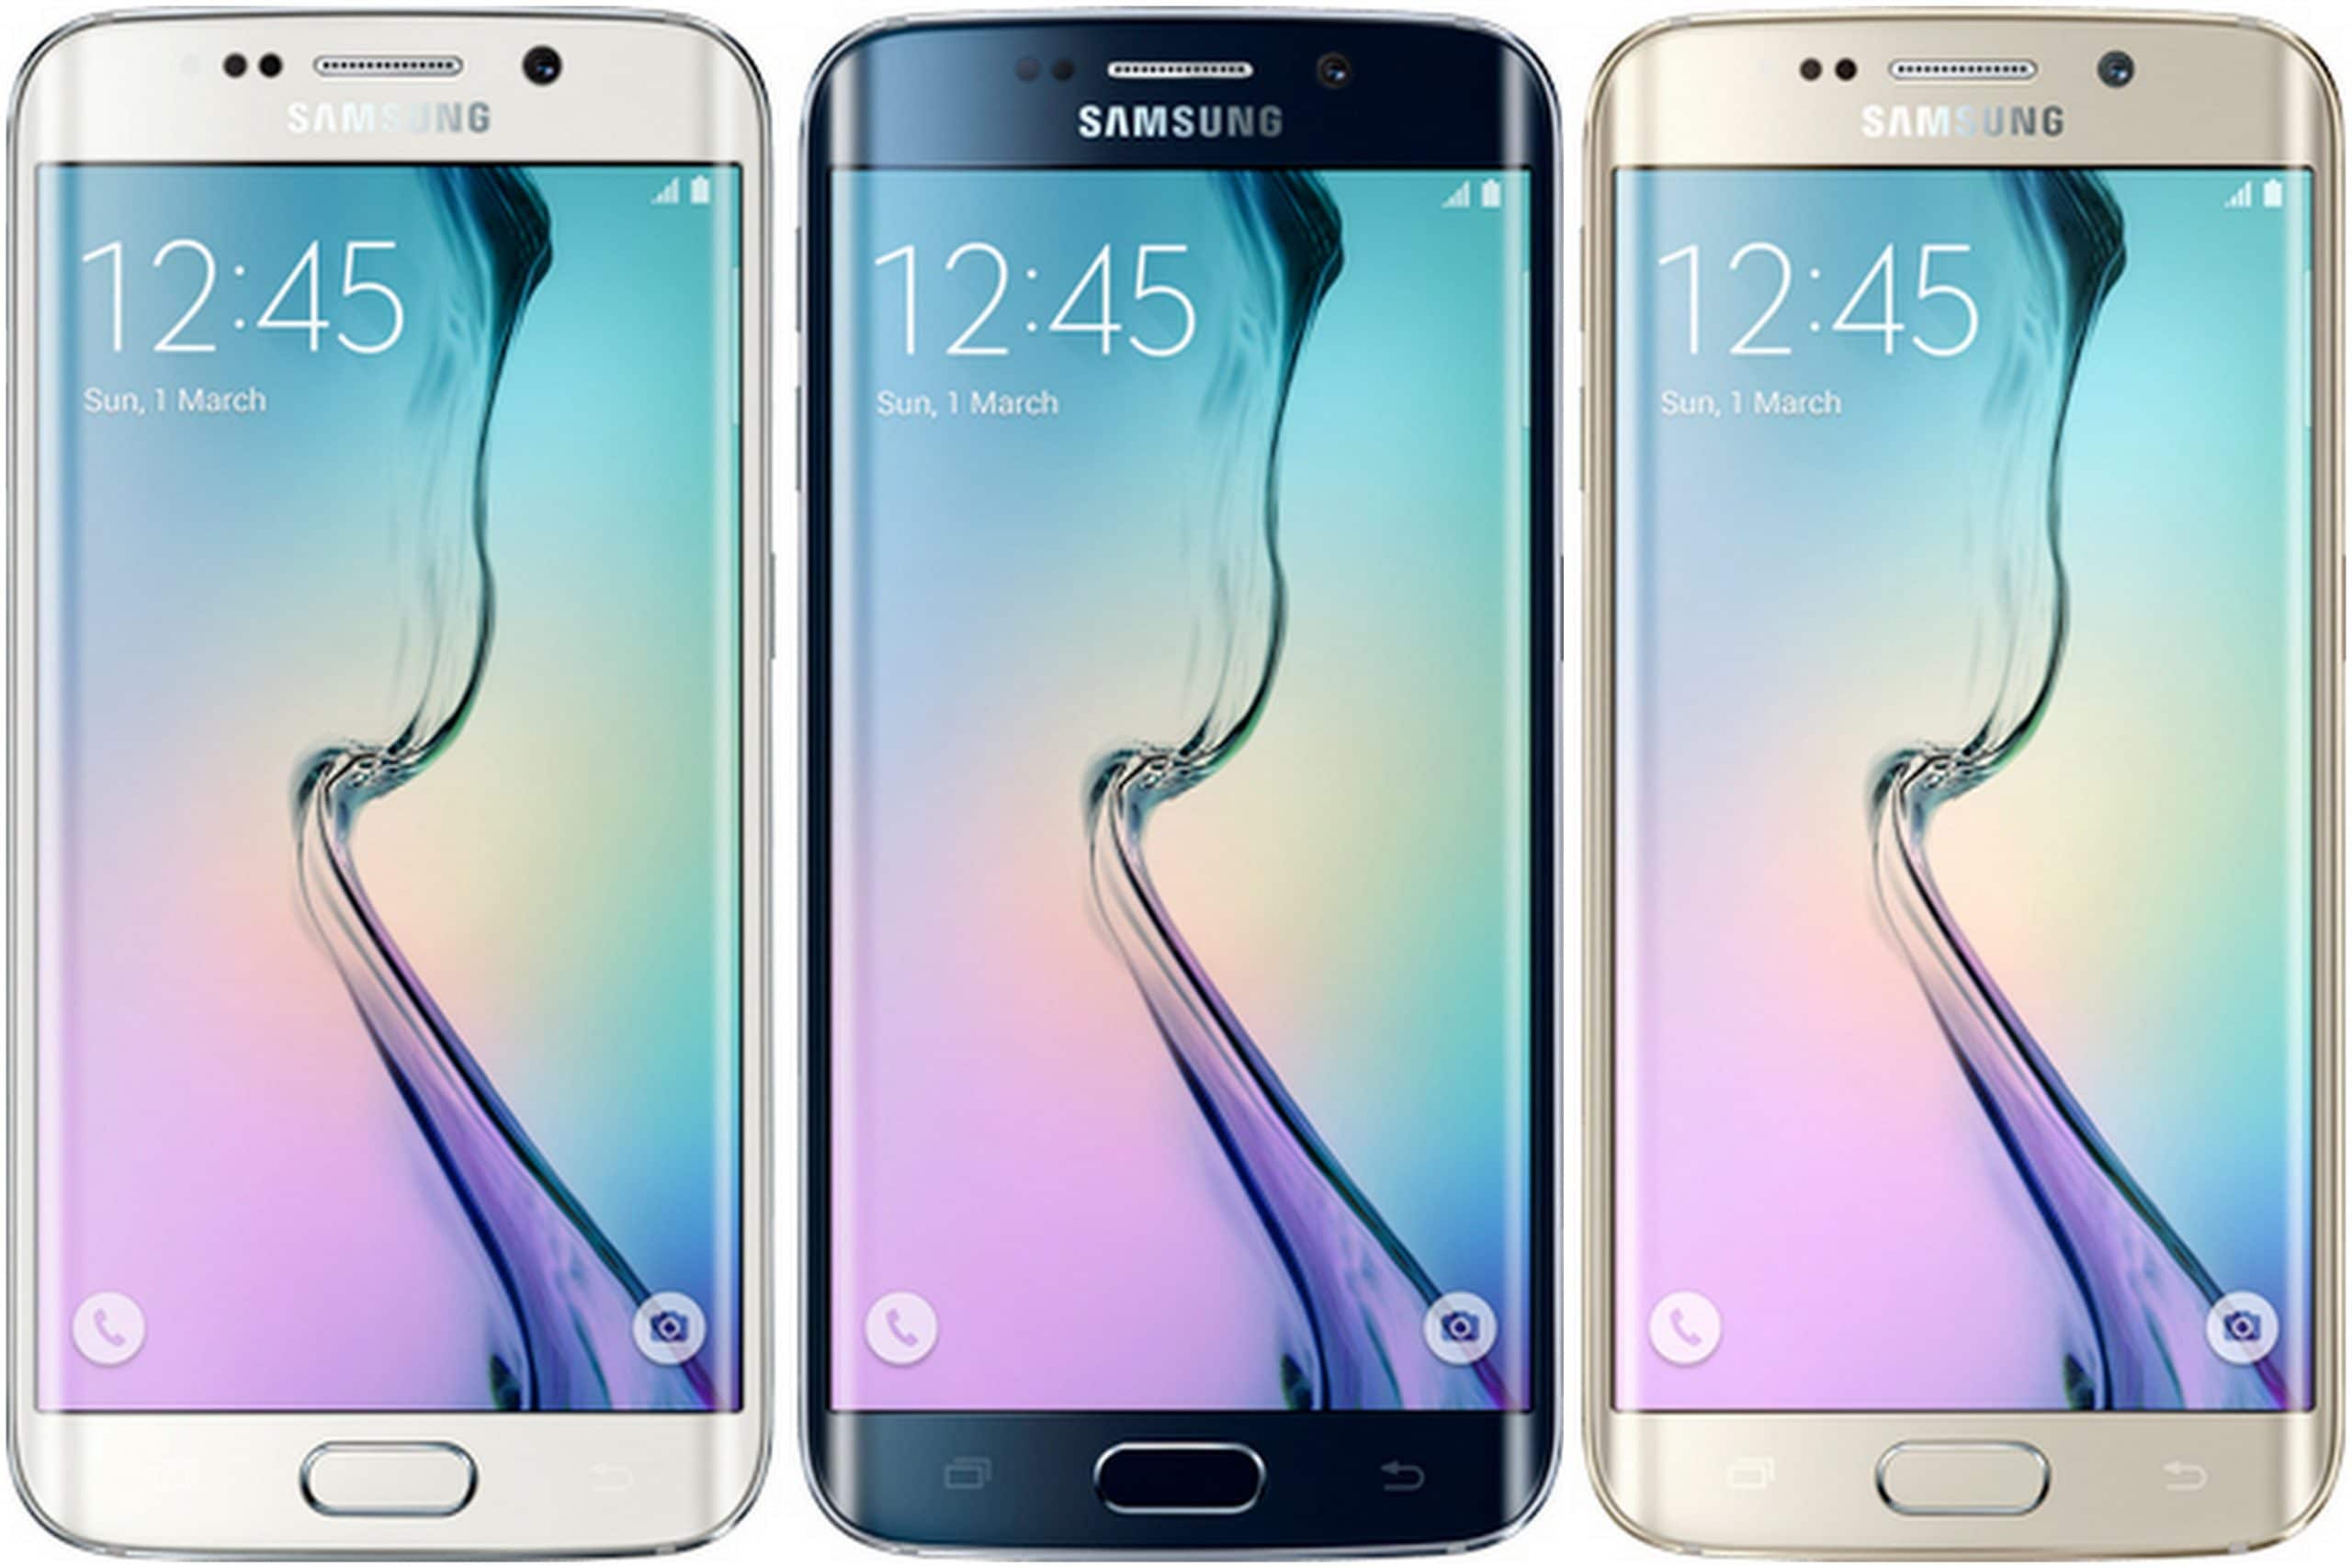 Samsung Galaxy S6 Edge smartphones